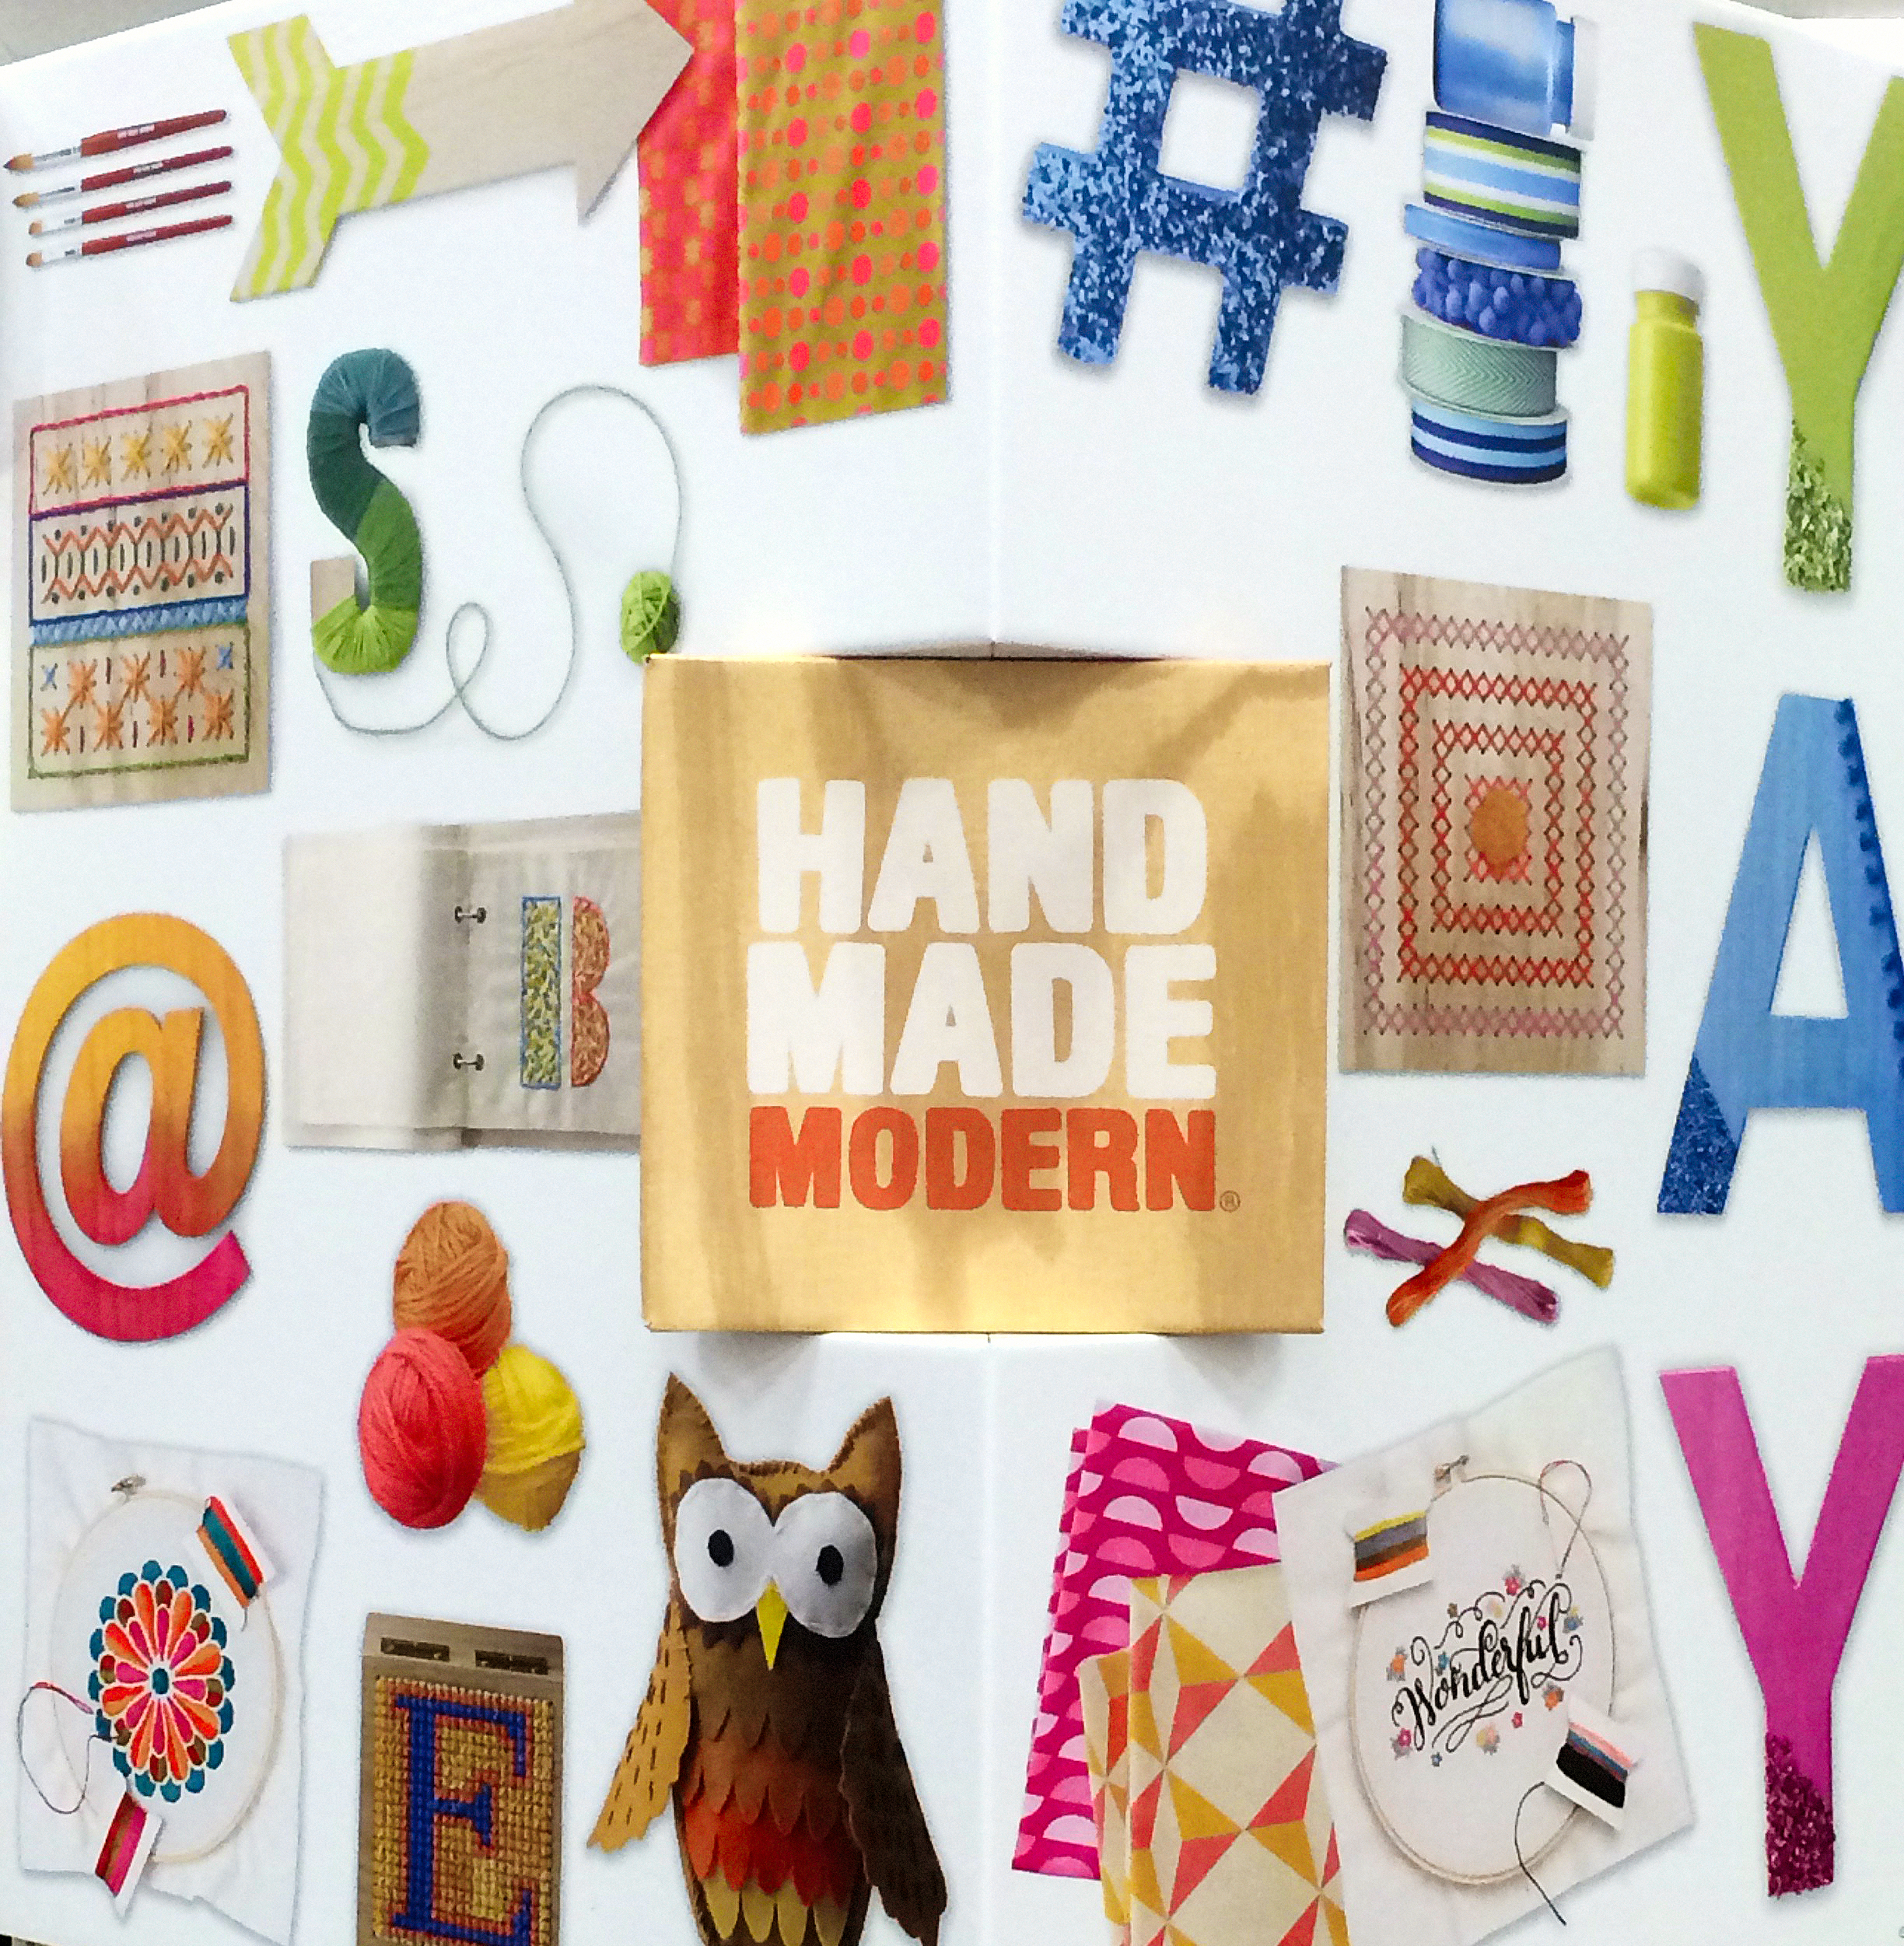 Hand Made Modern collection at Target via happymundane.com